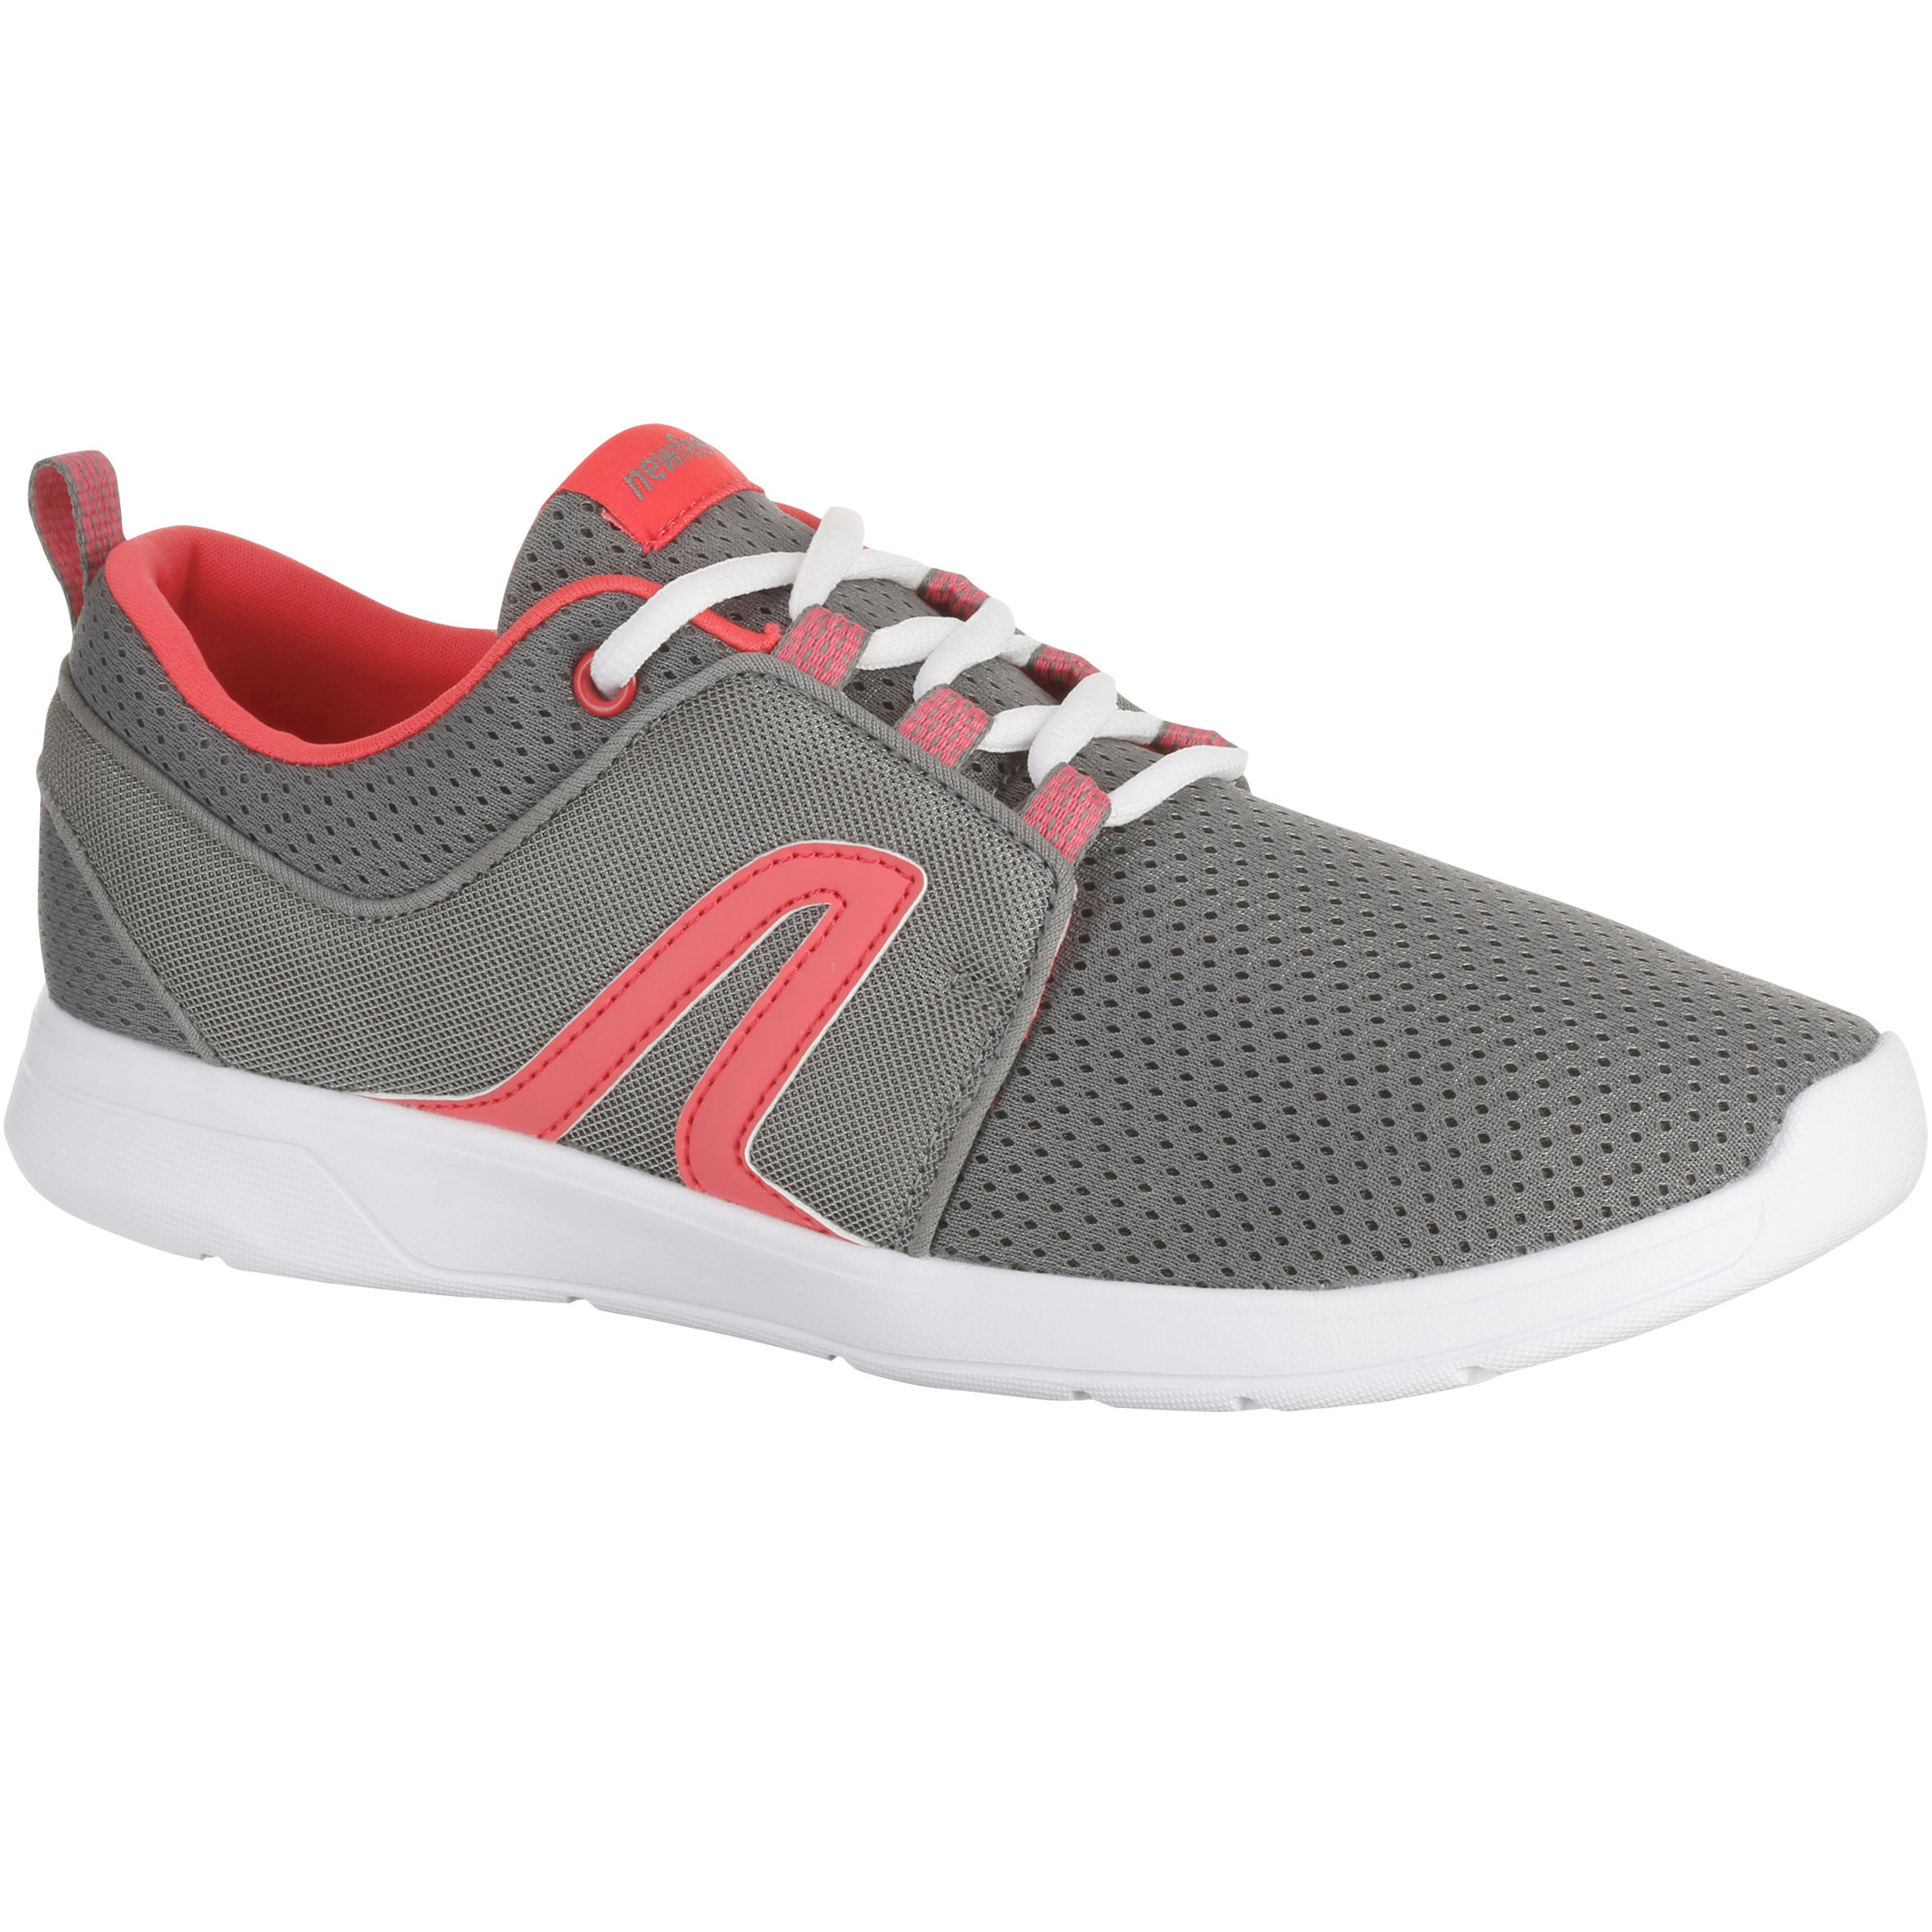 NEWFEEL Soft 140 Mesh Women's Fitness Walking Shoes - Grey/Pink